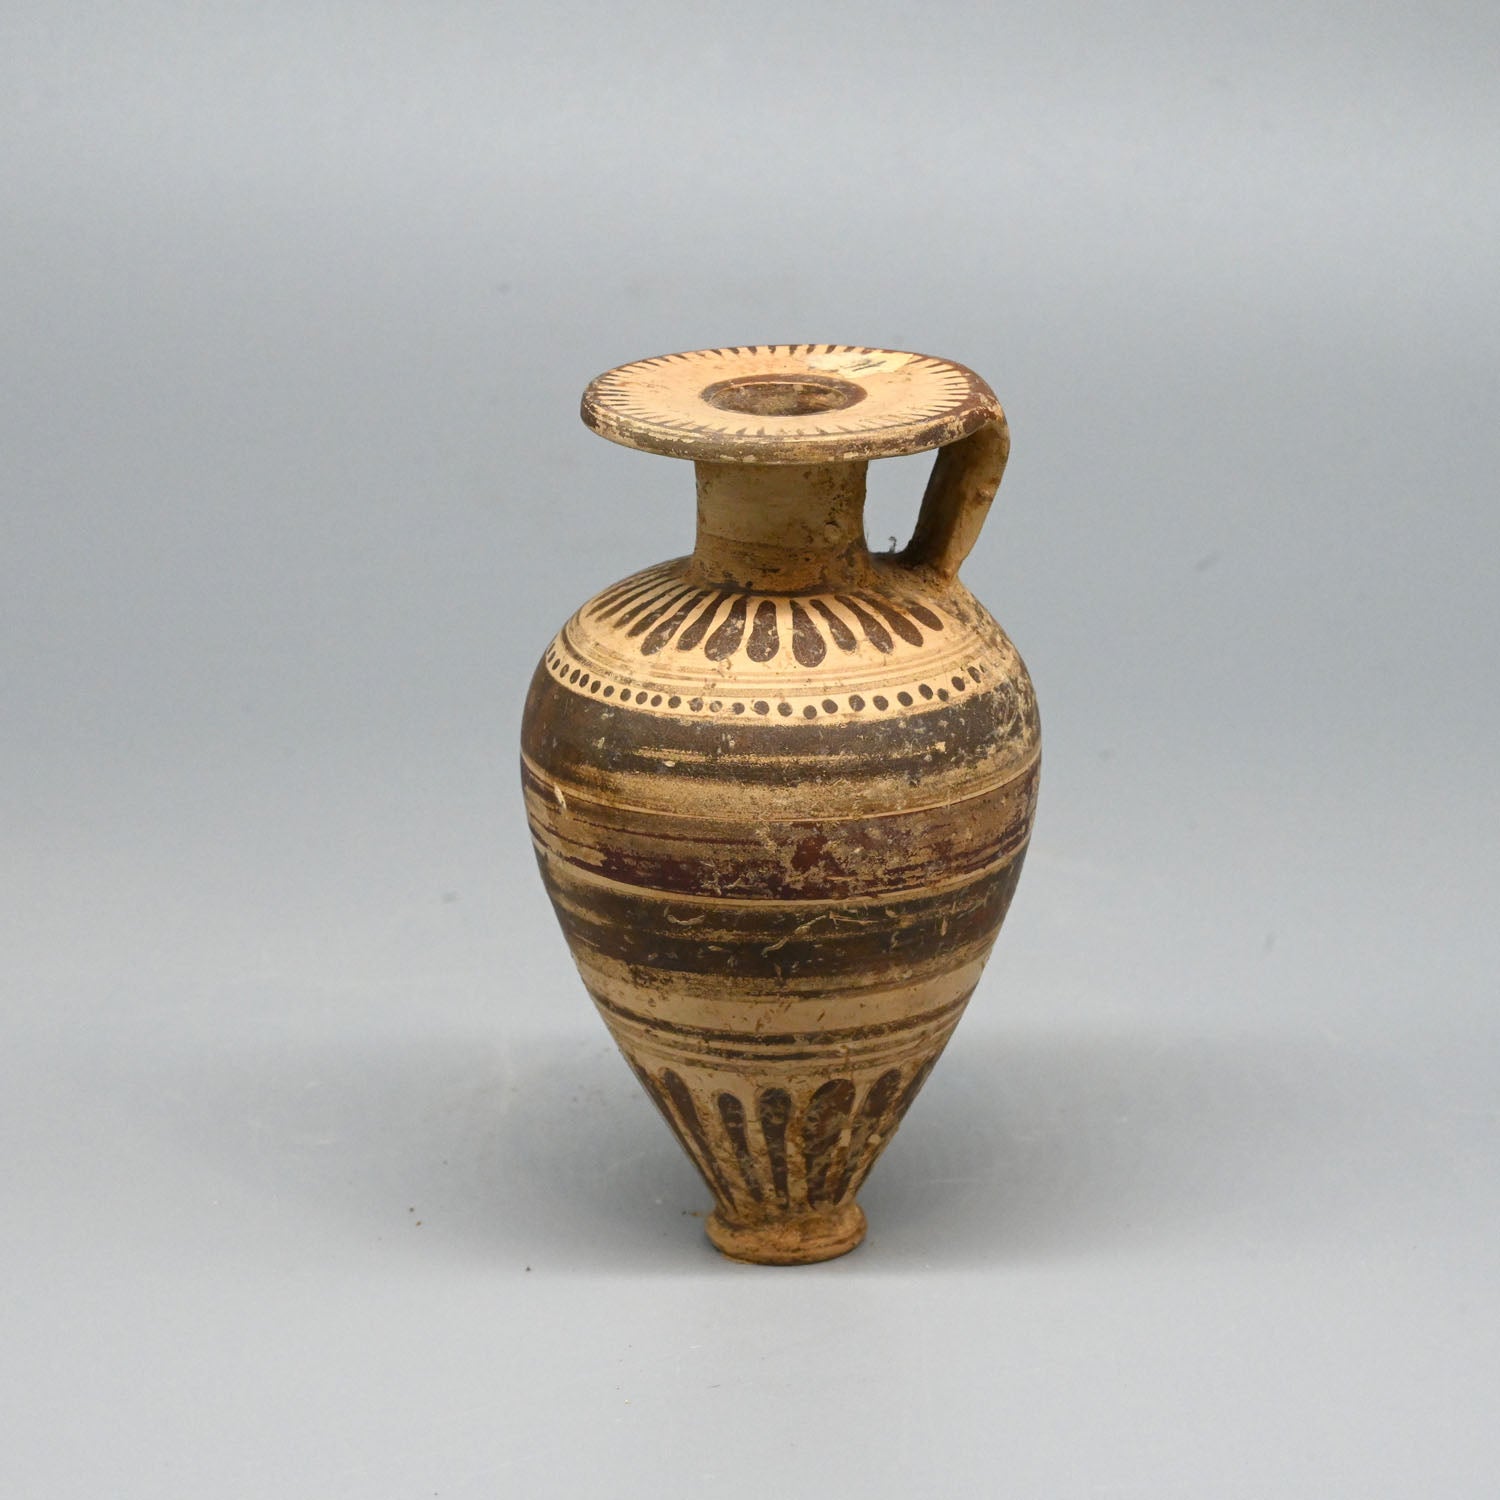 An Etrusco-Corinthian Piriform Aryballos, ca. 6th century BCE